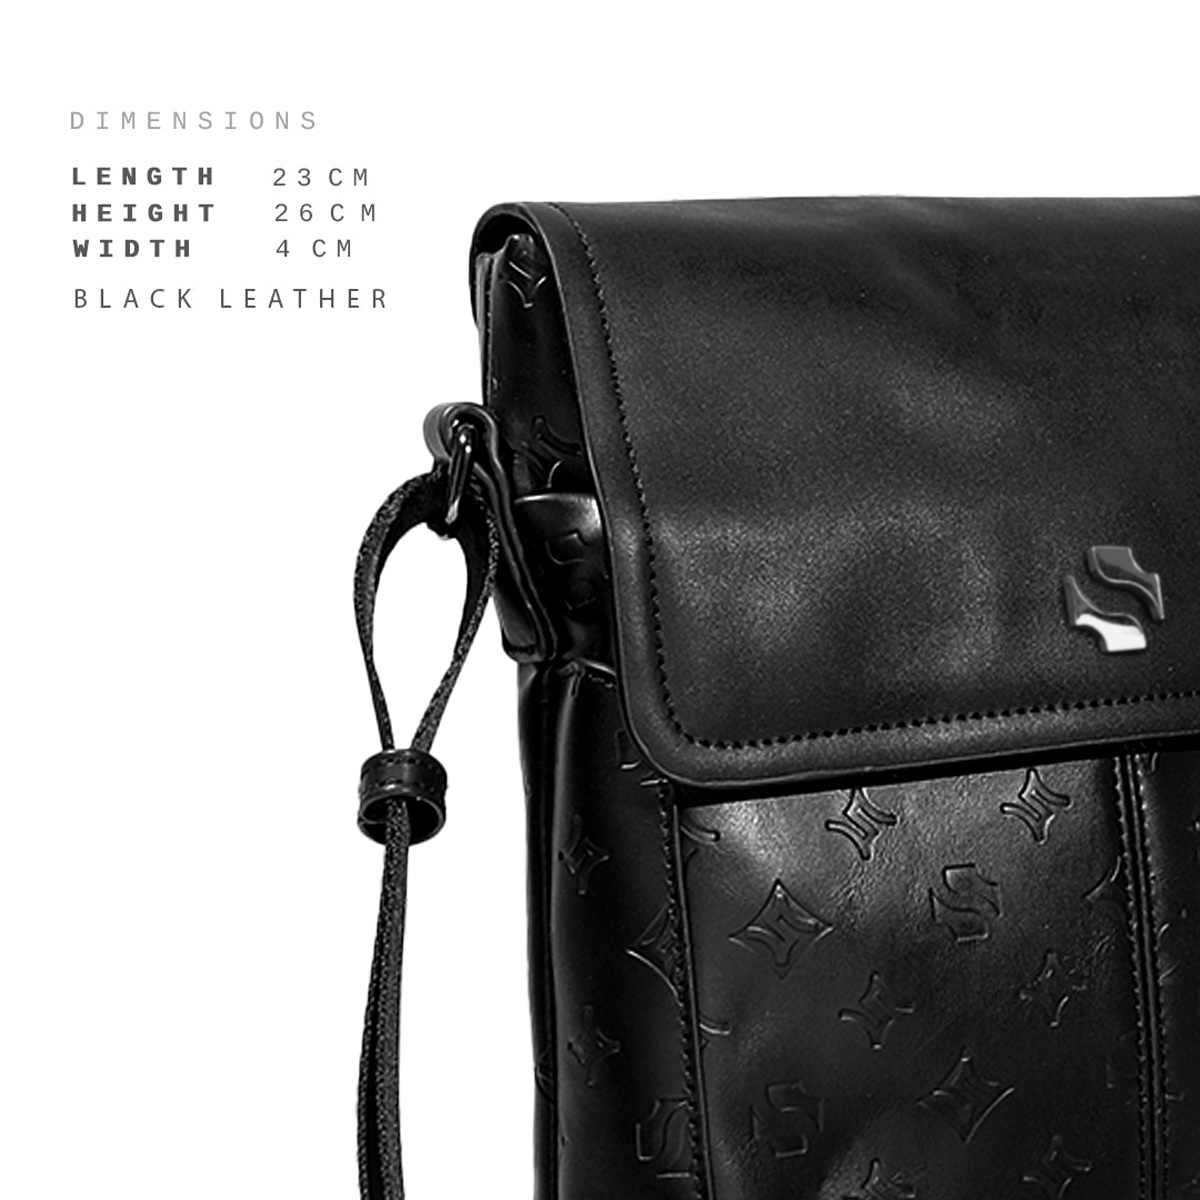 Shigetsu GERO Debossed Monogram Bag leather men sling bag